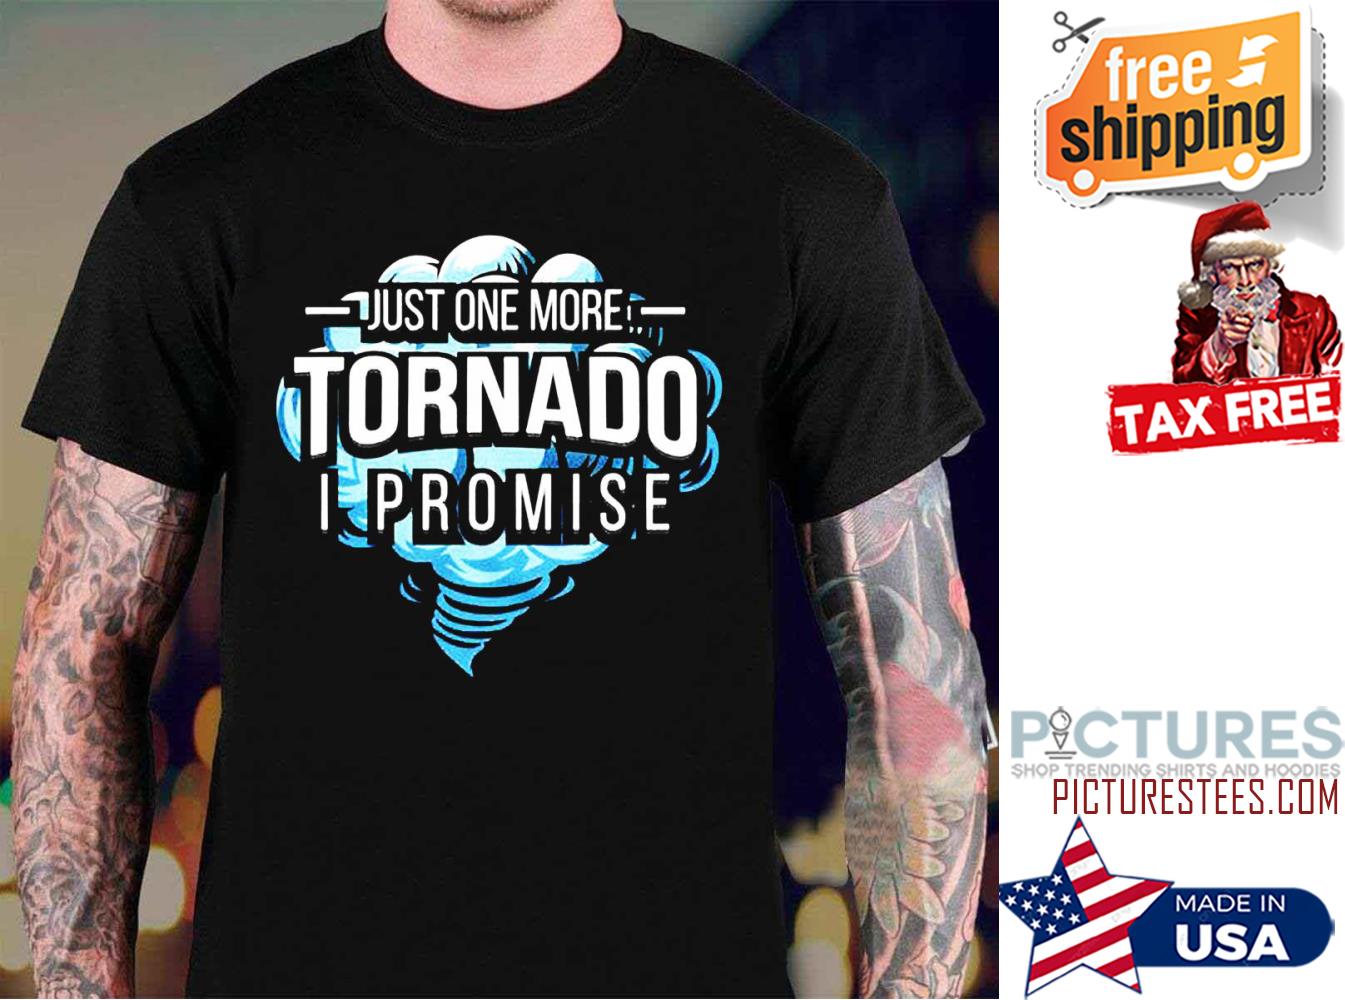 FREE shipping Tornado Lightning Thunder shirt, Unisex tee, hoodie ...